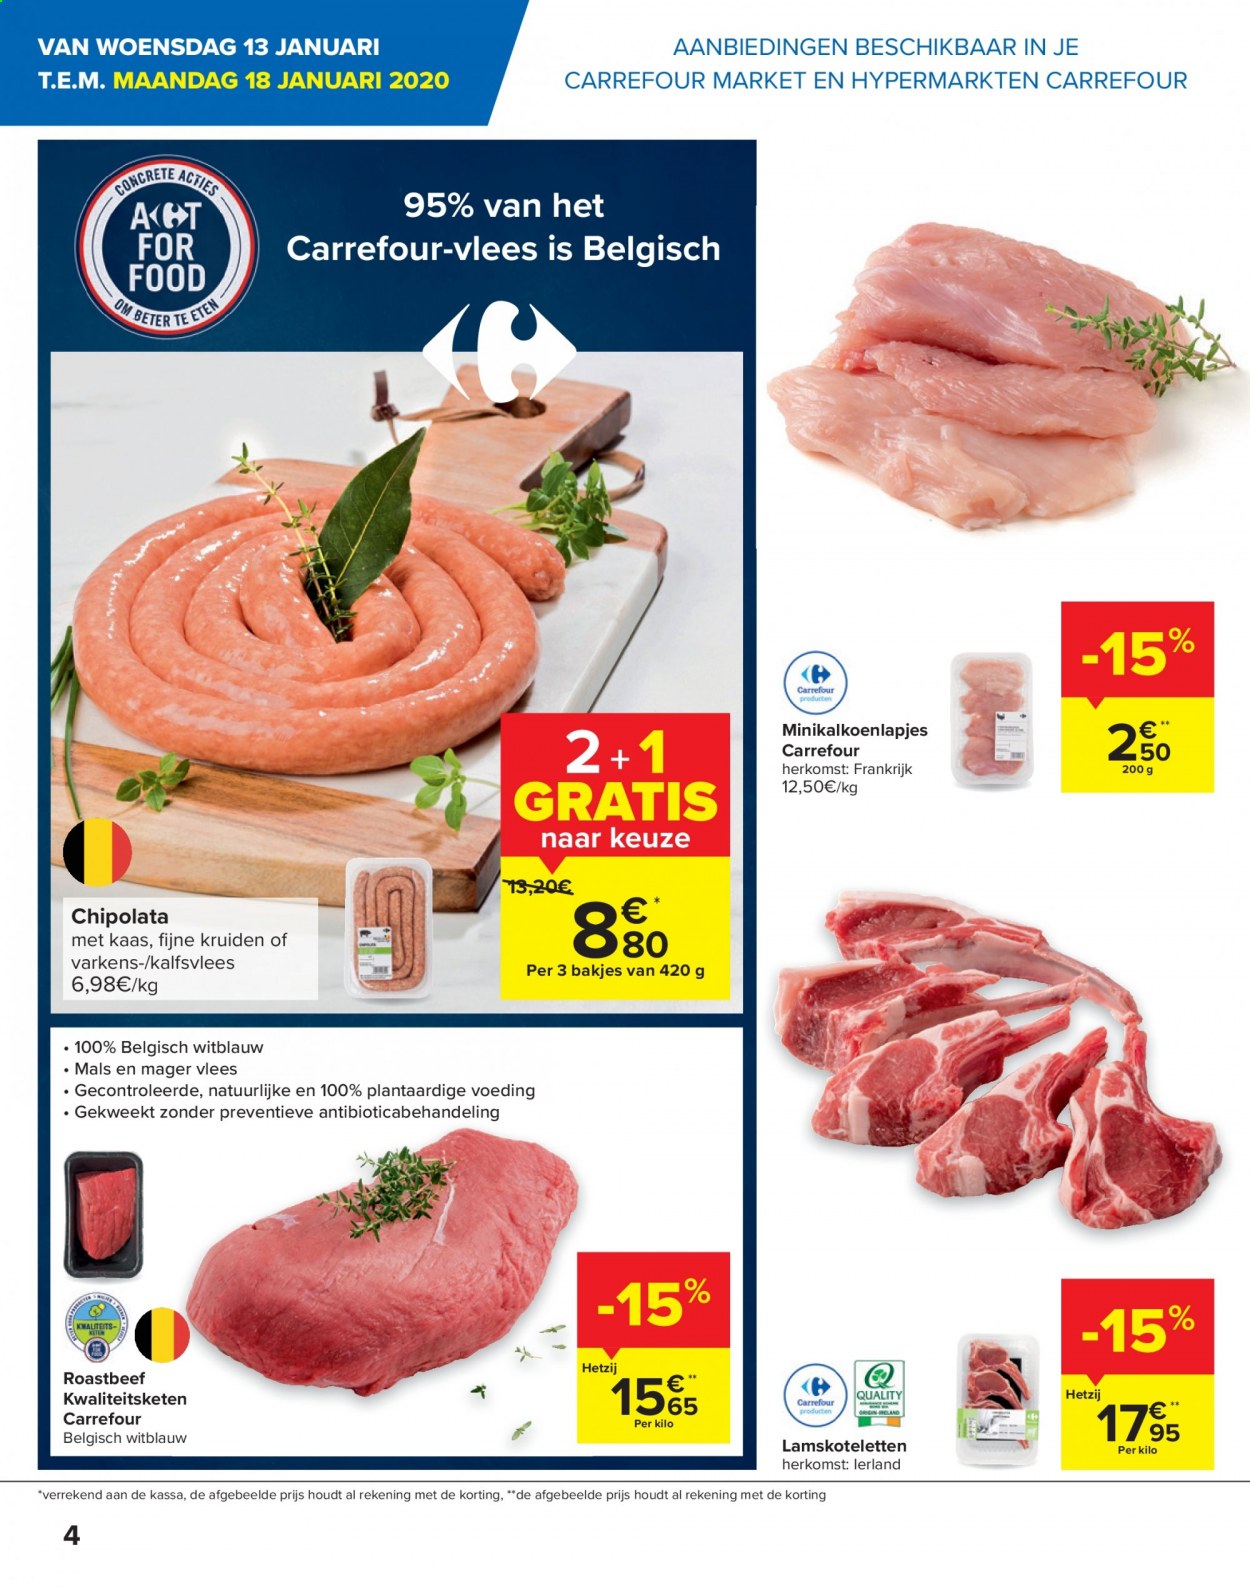 thumbnail - Carrefour-aanbieding - 13/01/2021 - 25/01/2021 -  producten in de aanbieding - chipolataworstjes, kaas, roastbeef. Pagina 4.